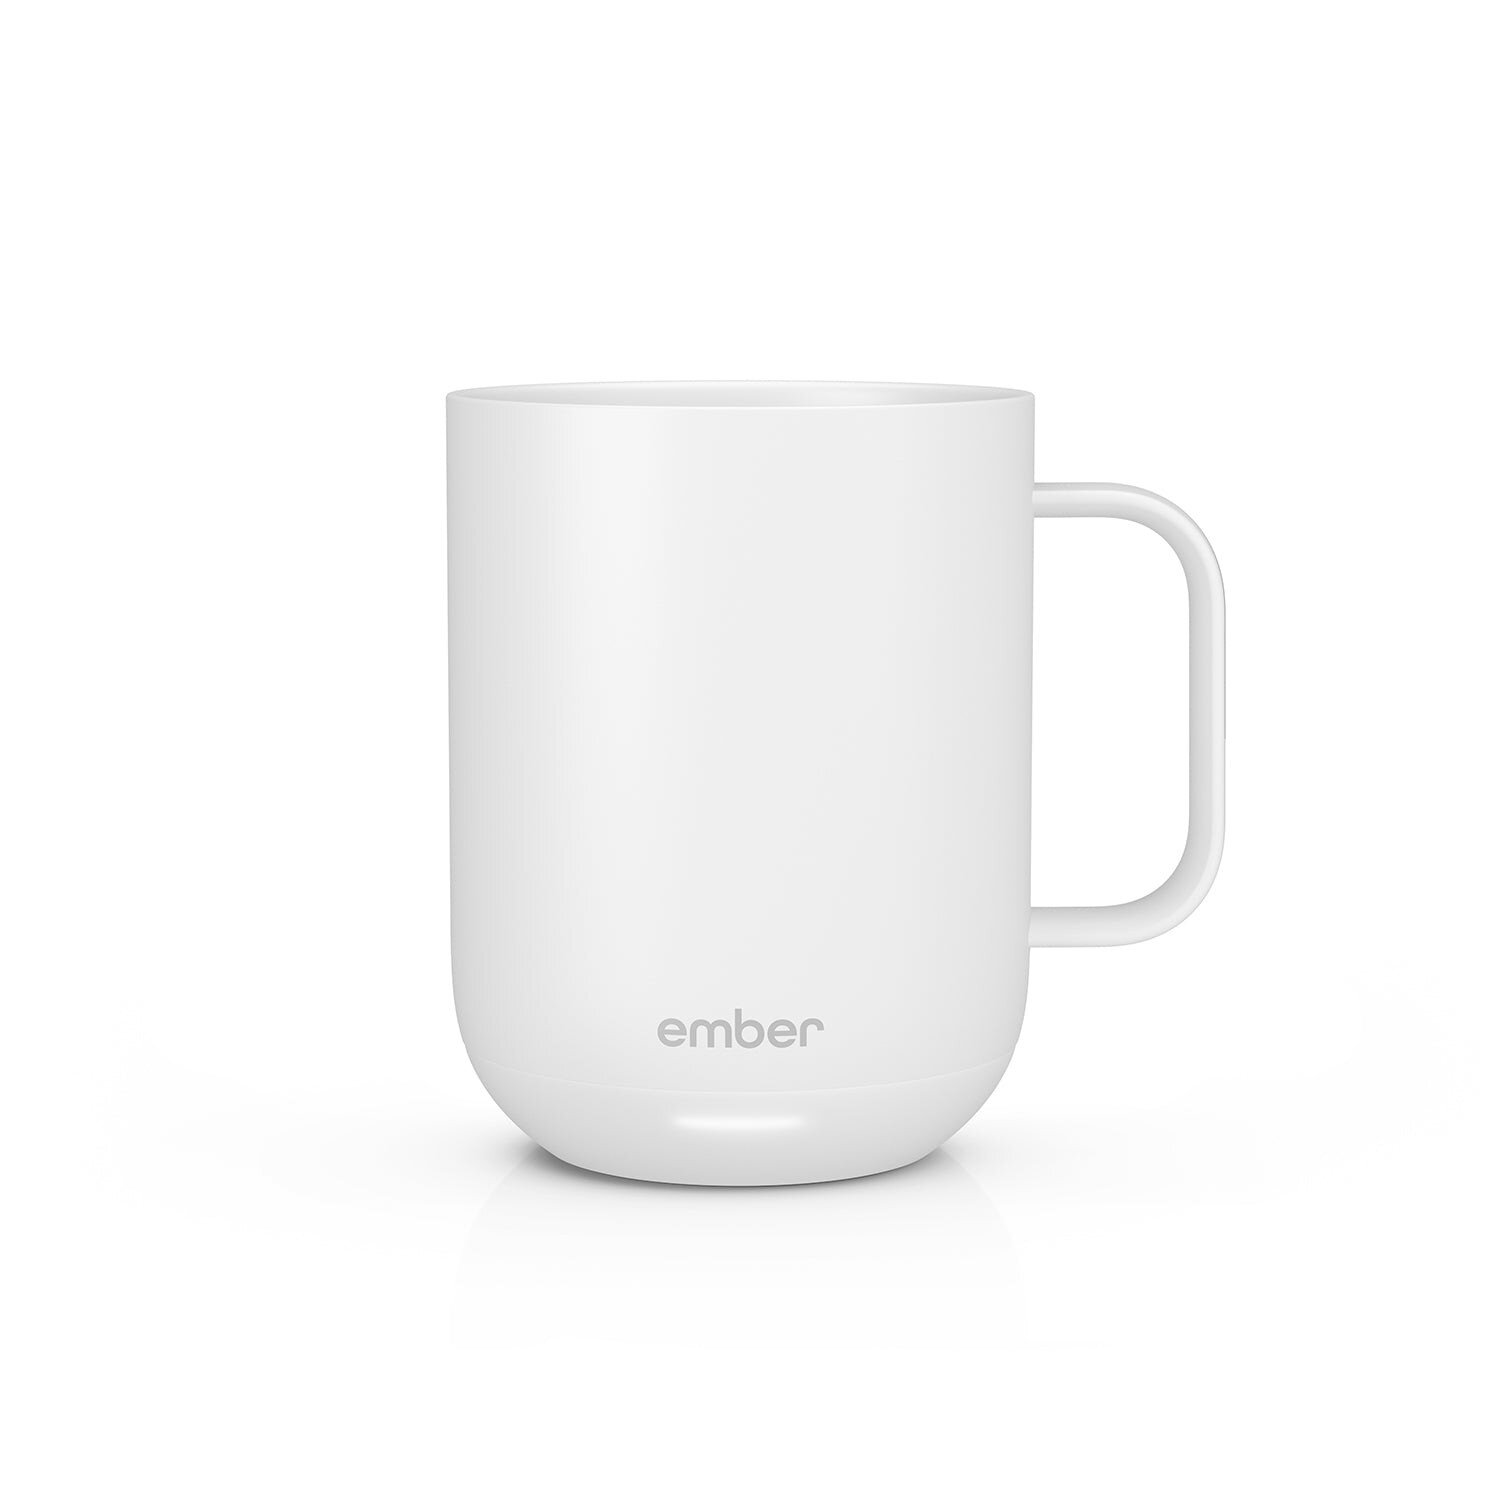 Ember 10 Oz Ceramic Temperature Control Smart Mug 2 CM191000US